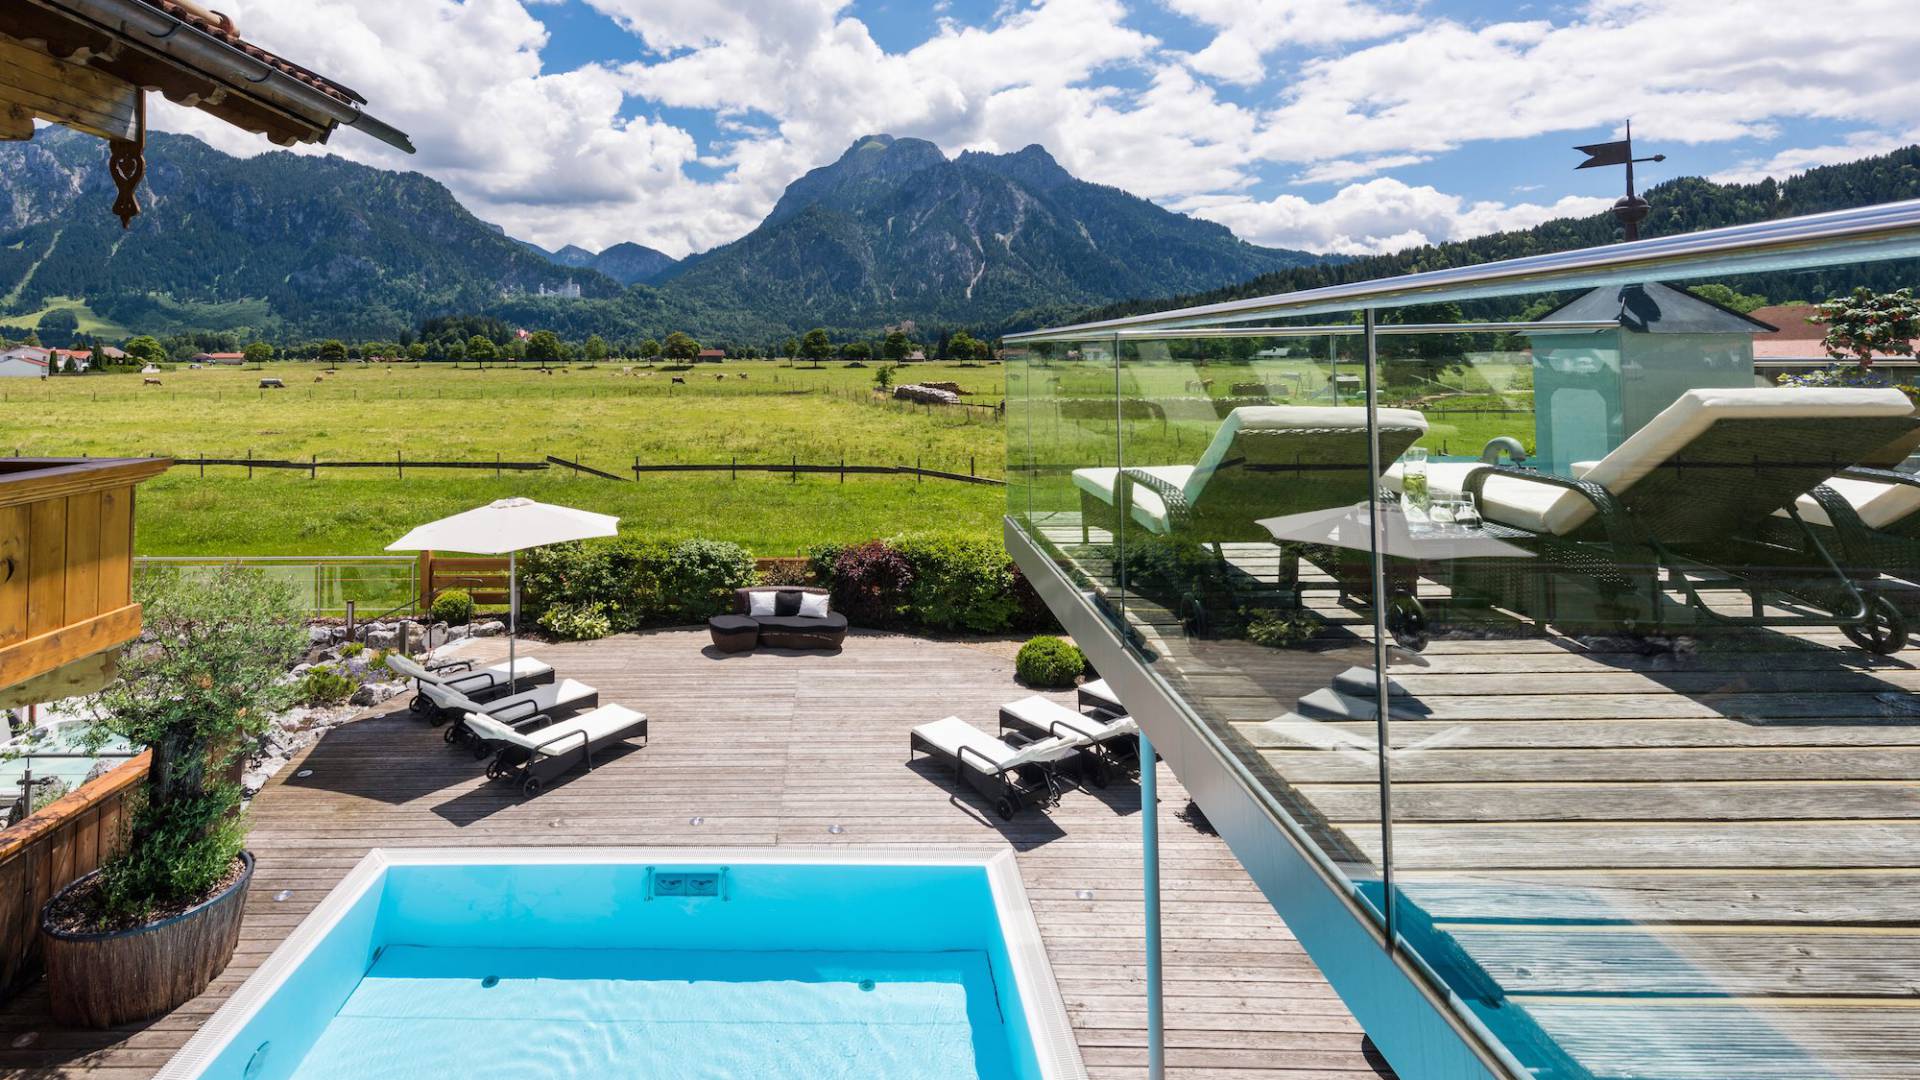 Hotel mit Pool im Allgäu und Bergblick